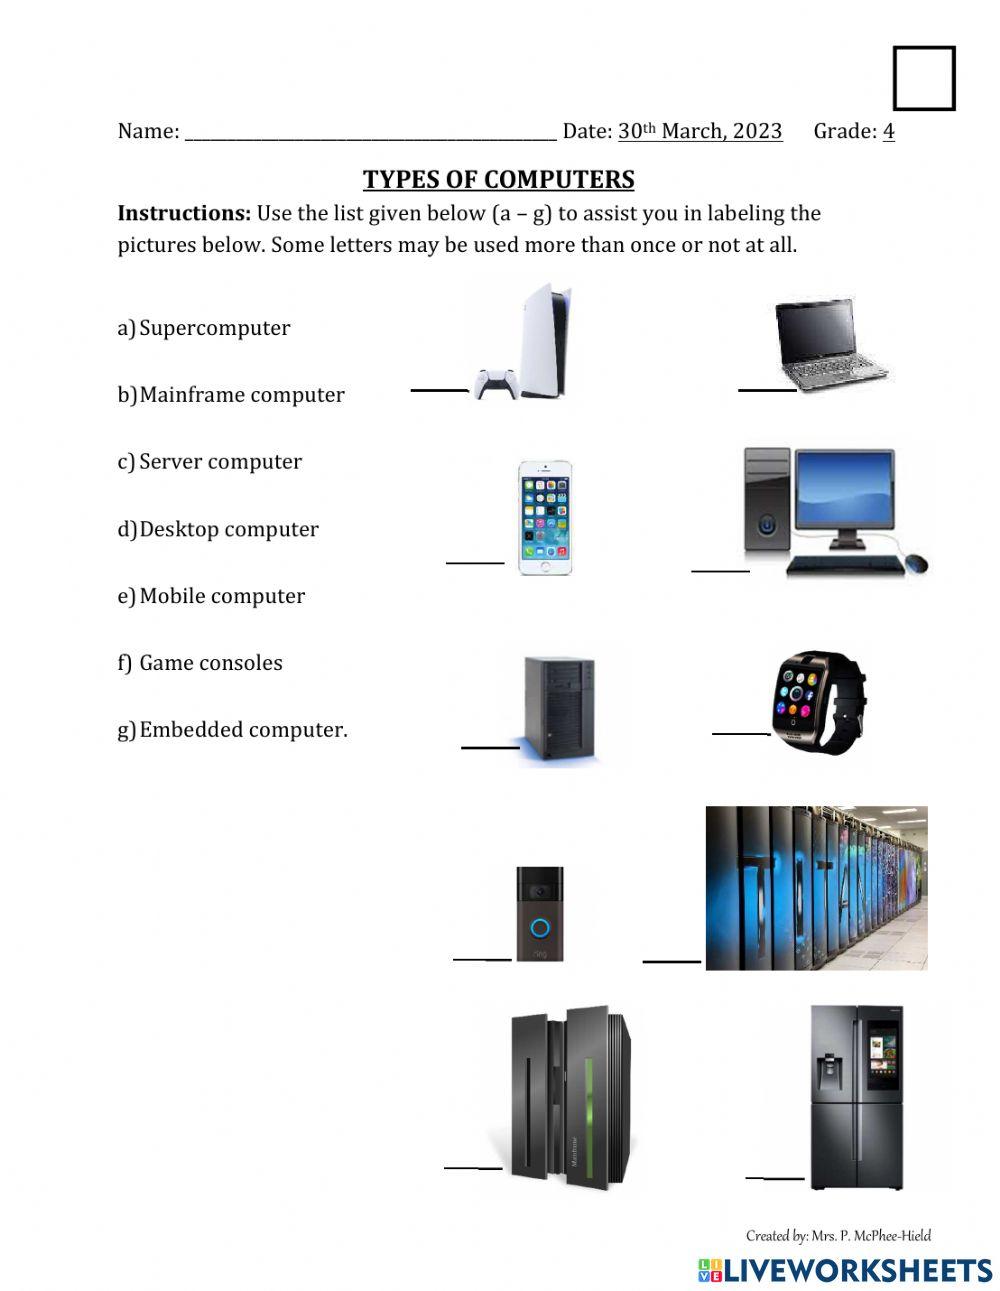 Categories of Computers